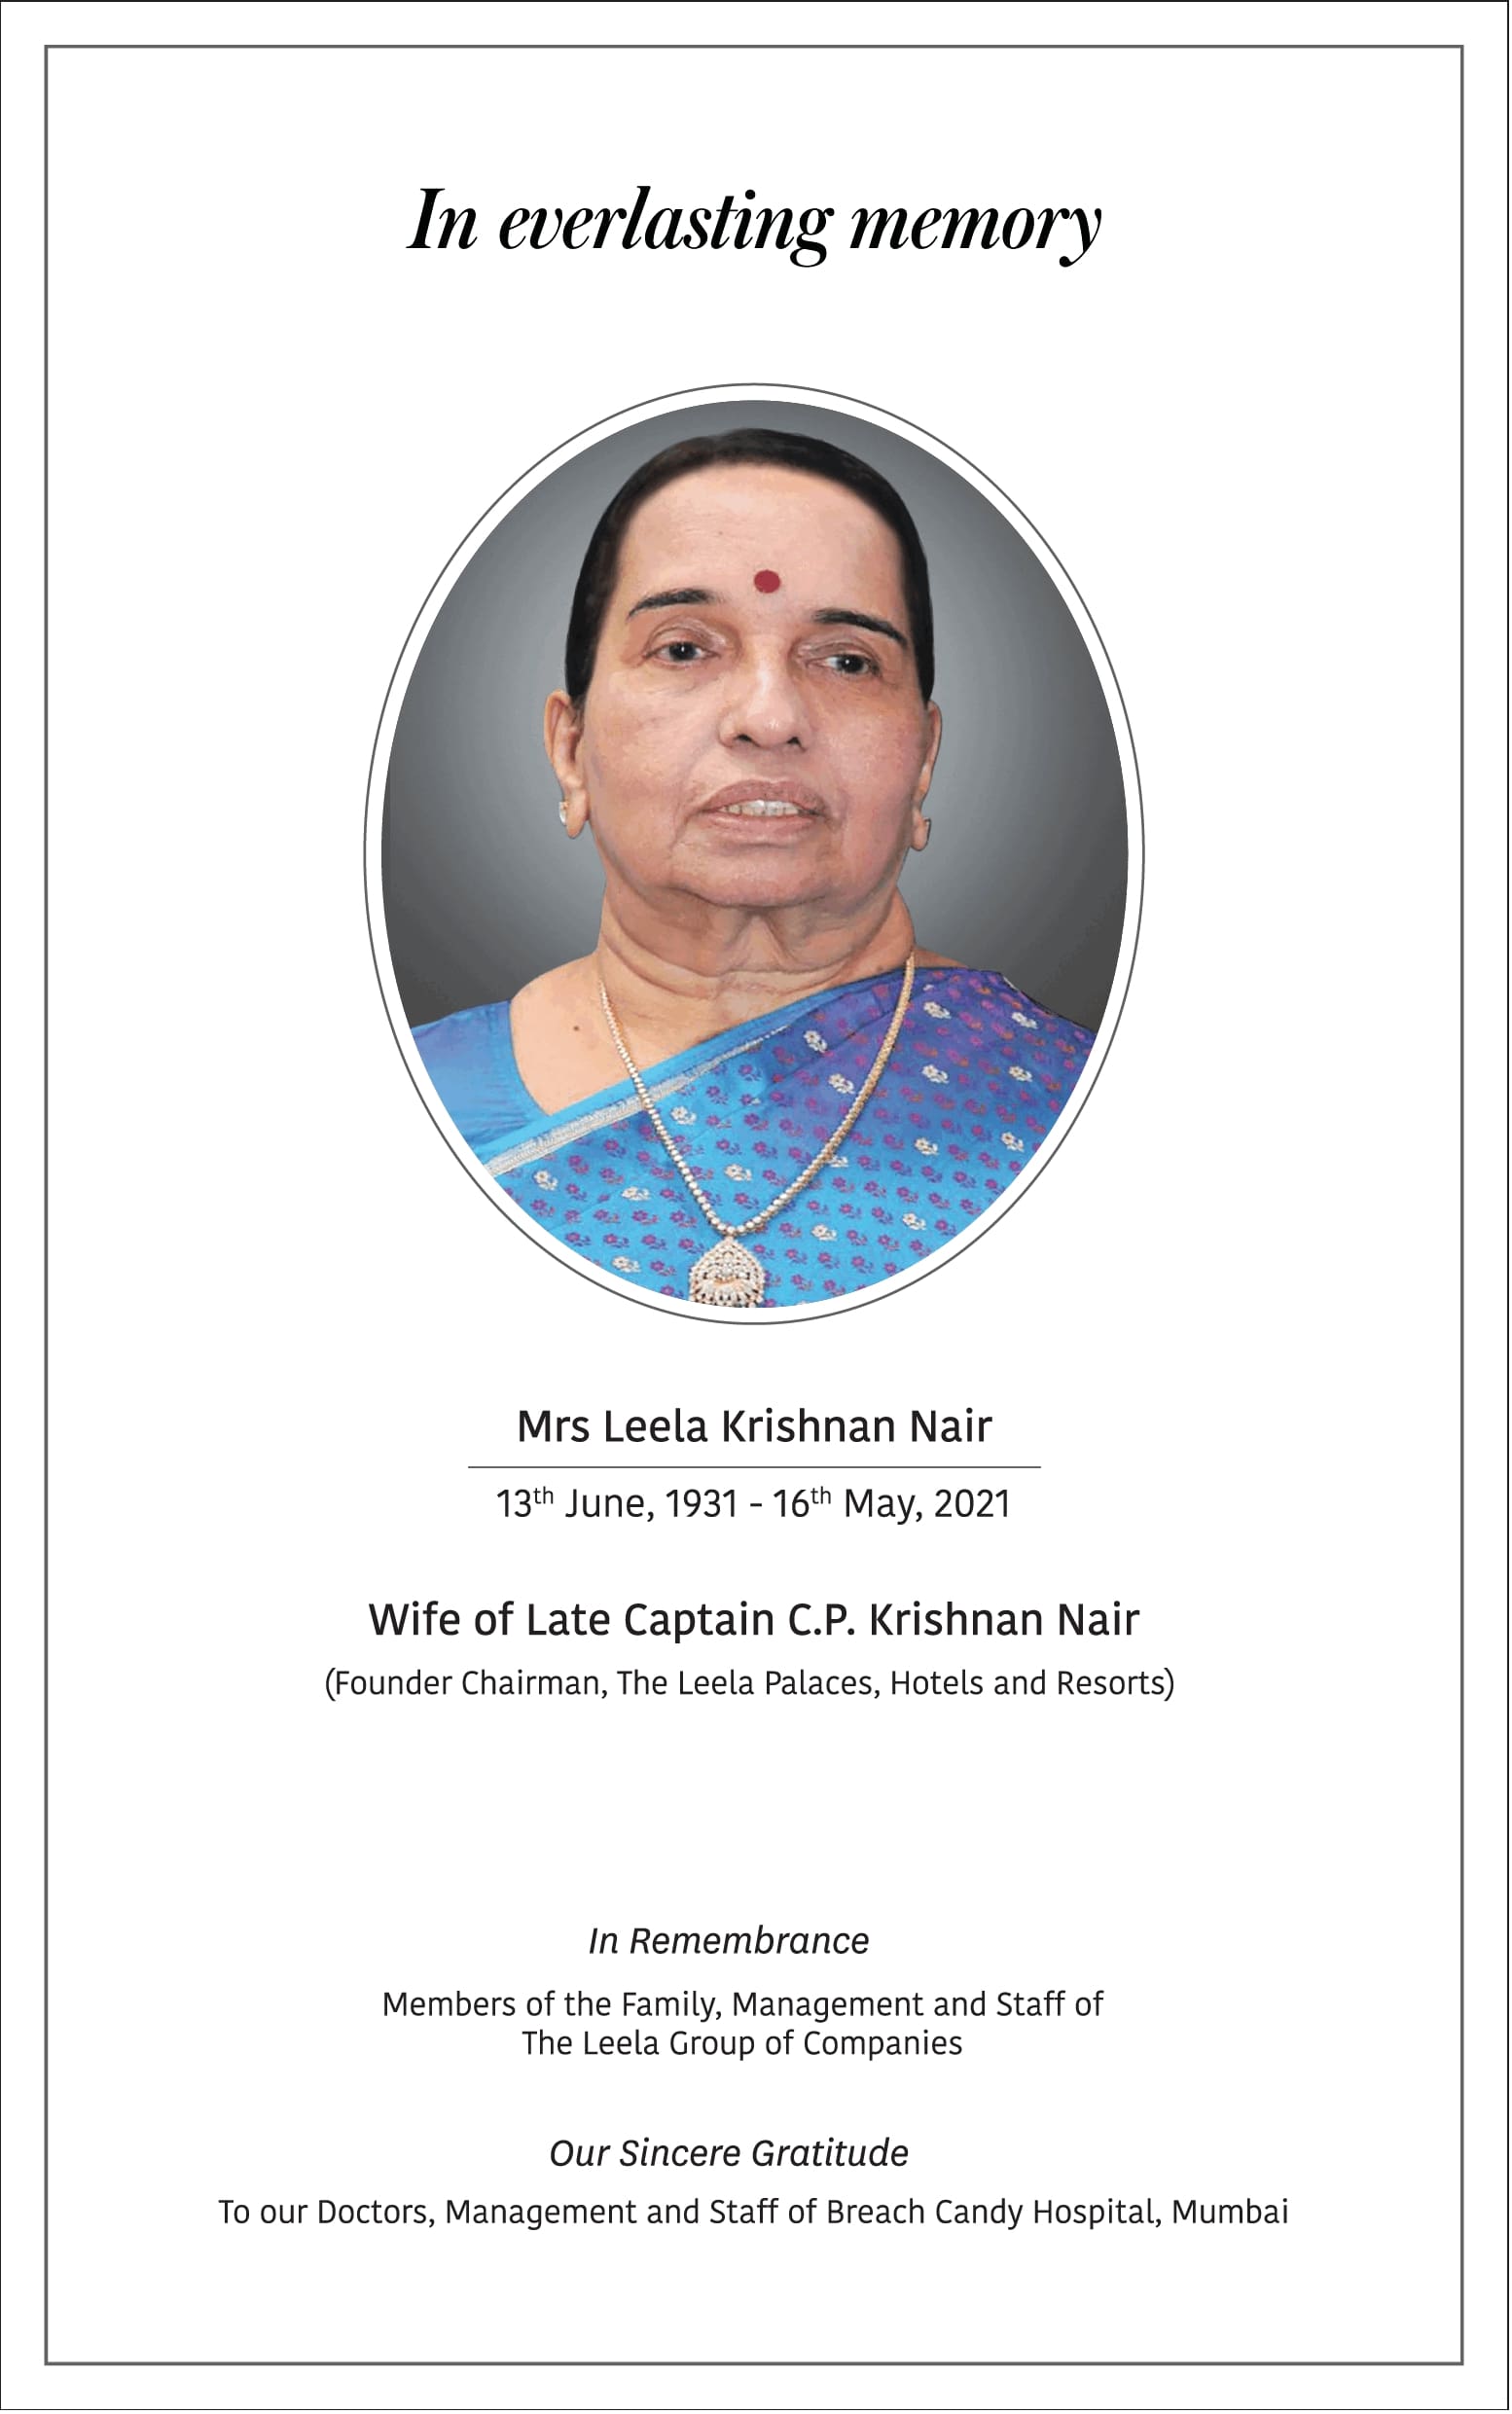 in-everlasting-memory-mrs-leela-krishnan-nair-ad-times-of-india-mumbai-18-05-2021